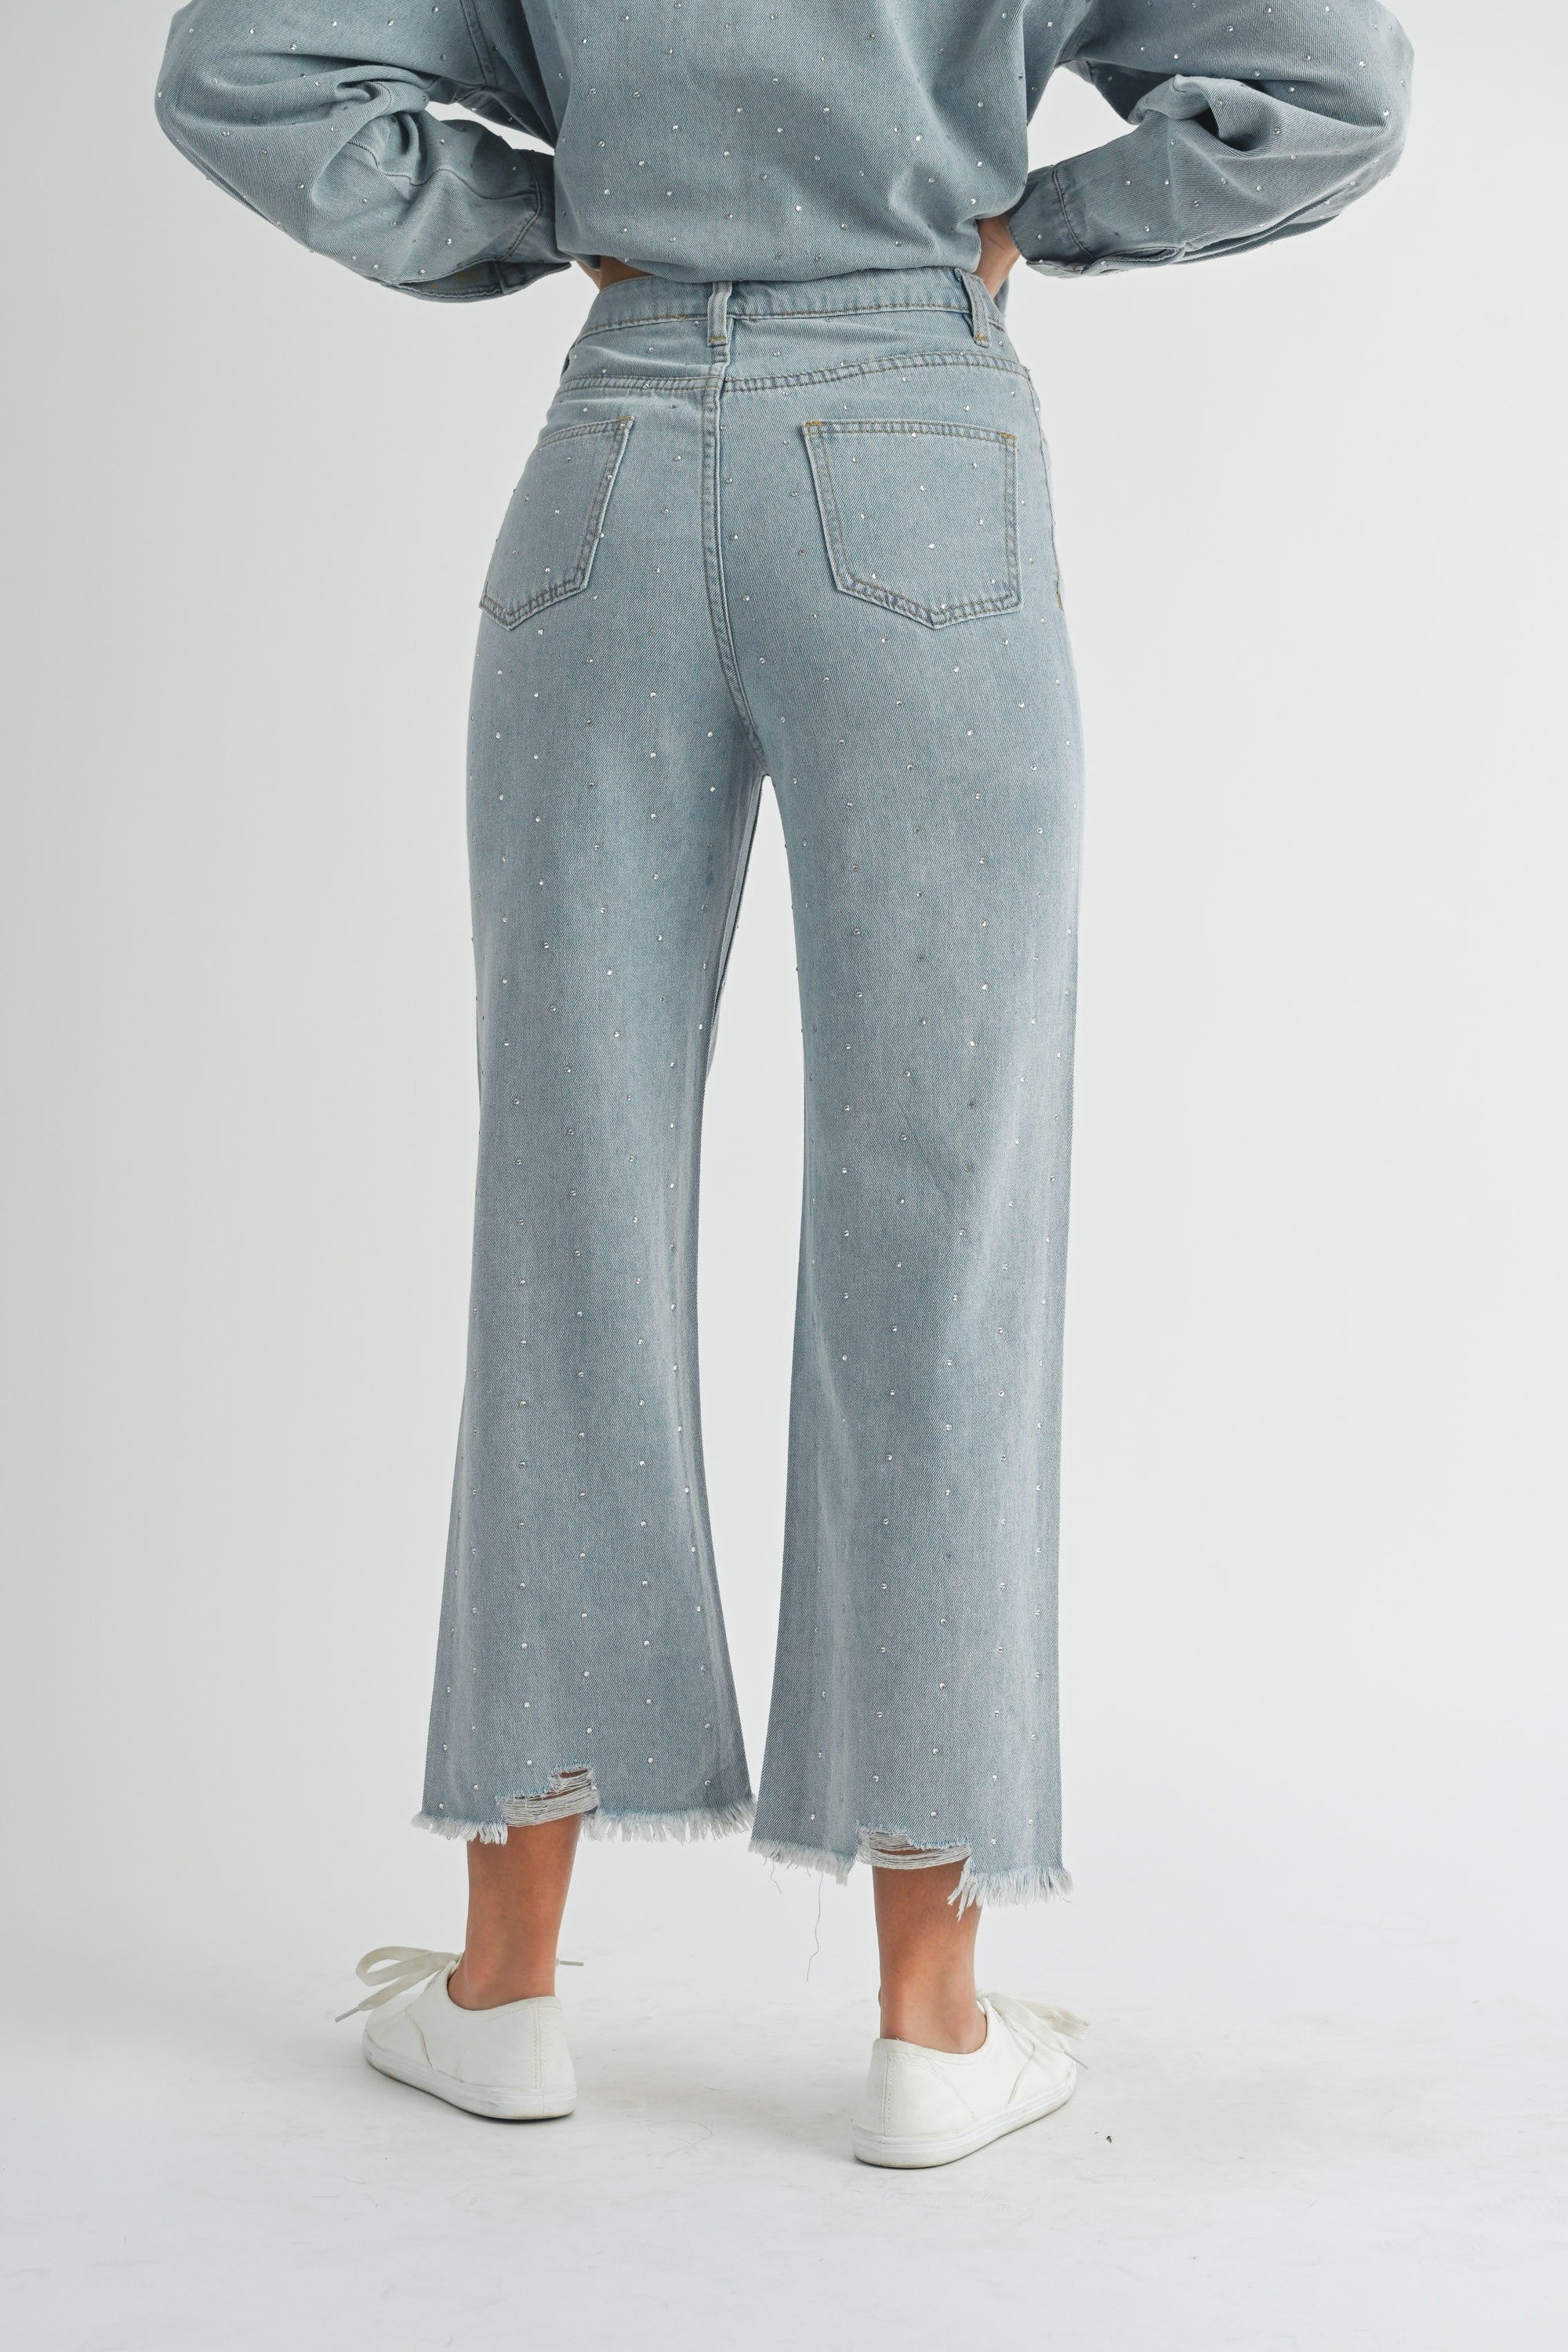 Rhinestone Detail High Waisted Crop Jeans